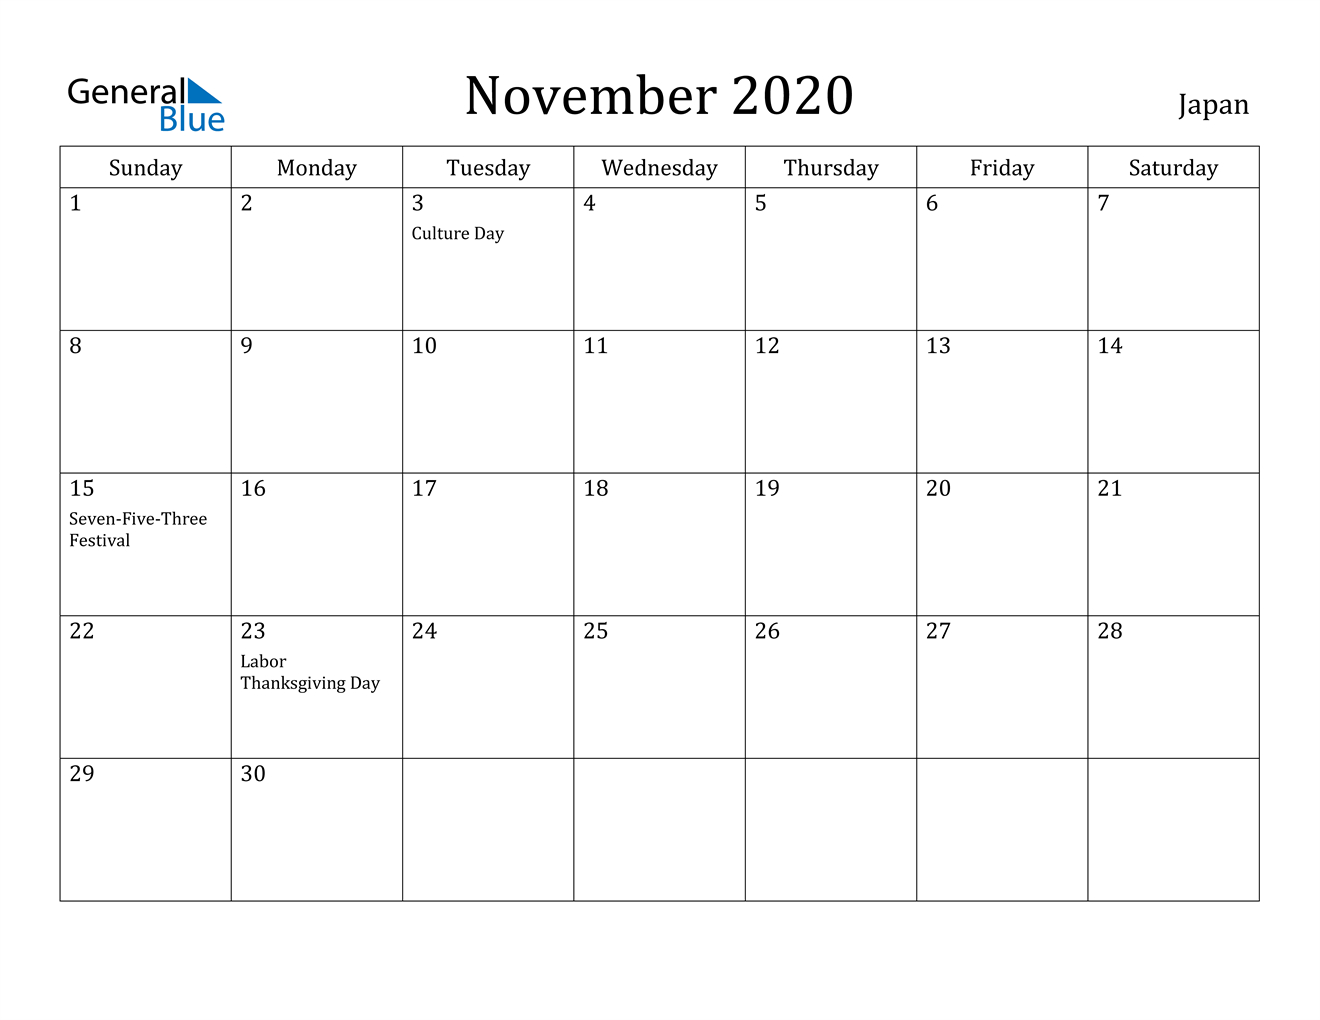 November 2020 Calendar - Japan